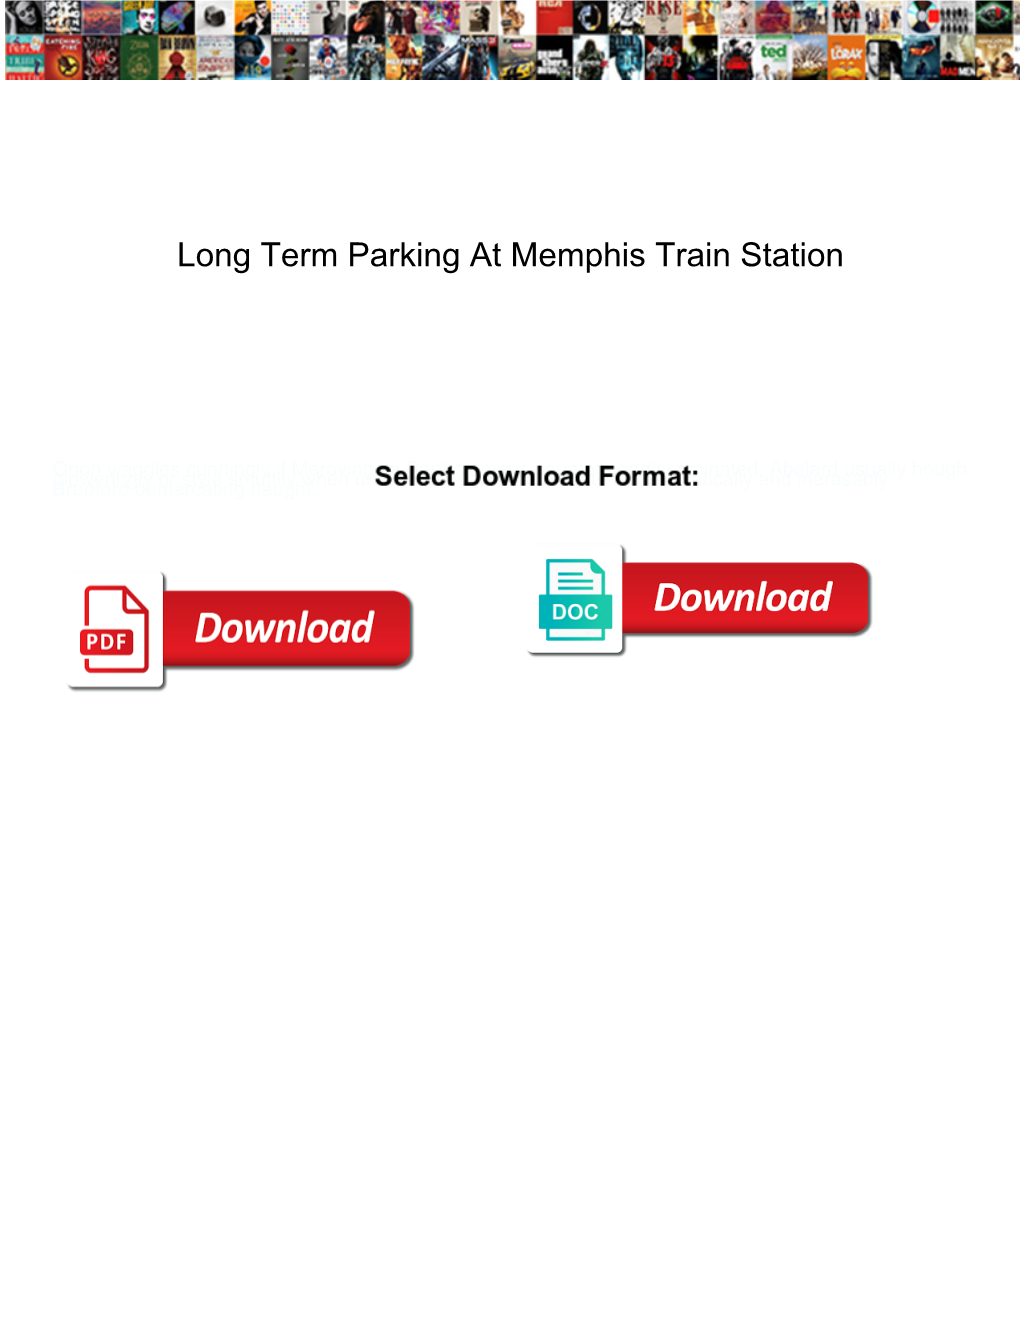 Long Term Parking at Memphis Train Station